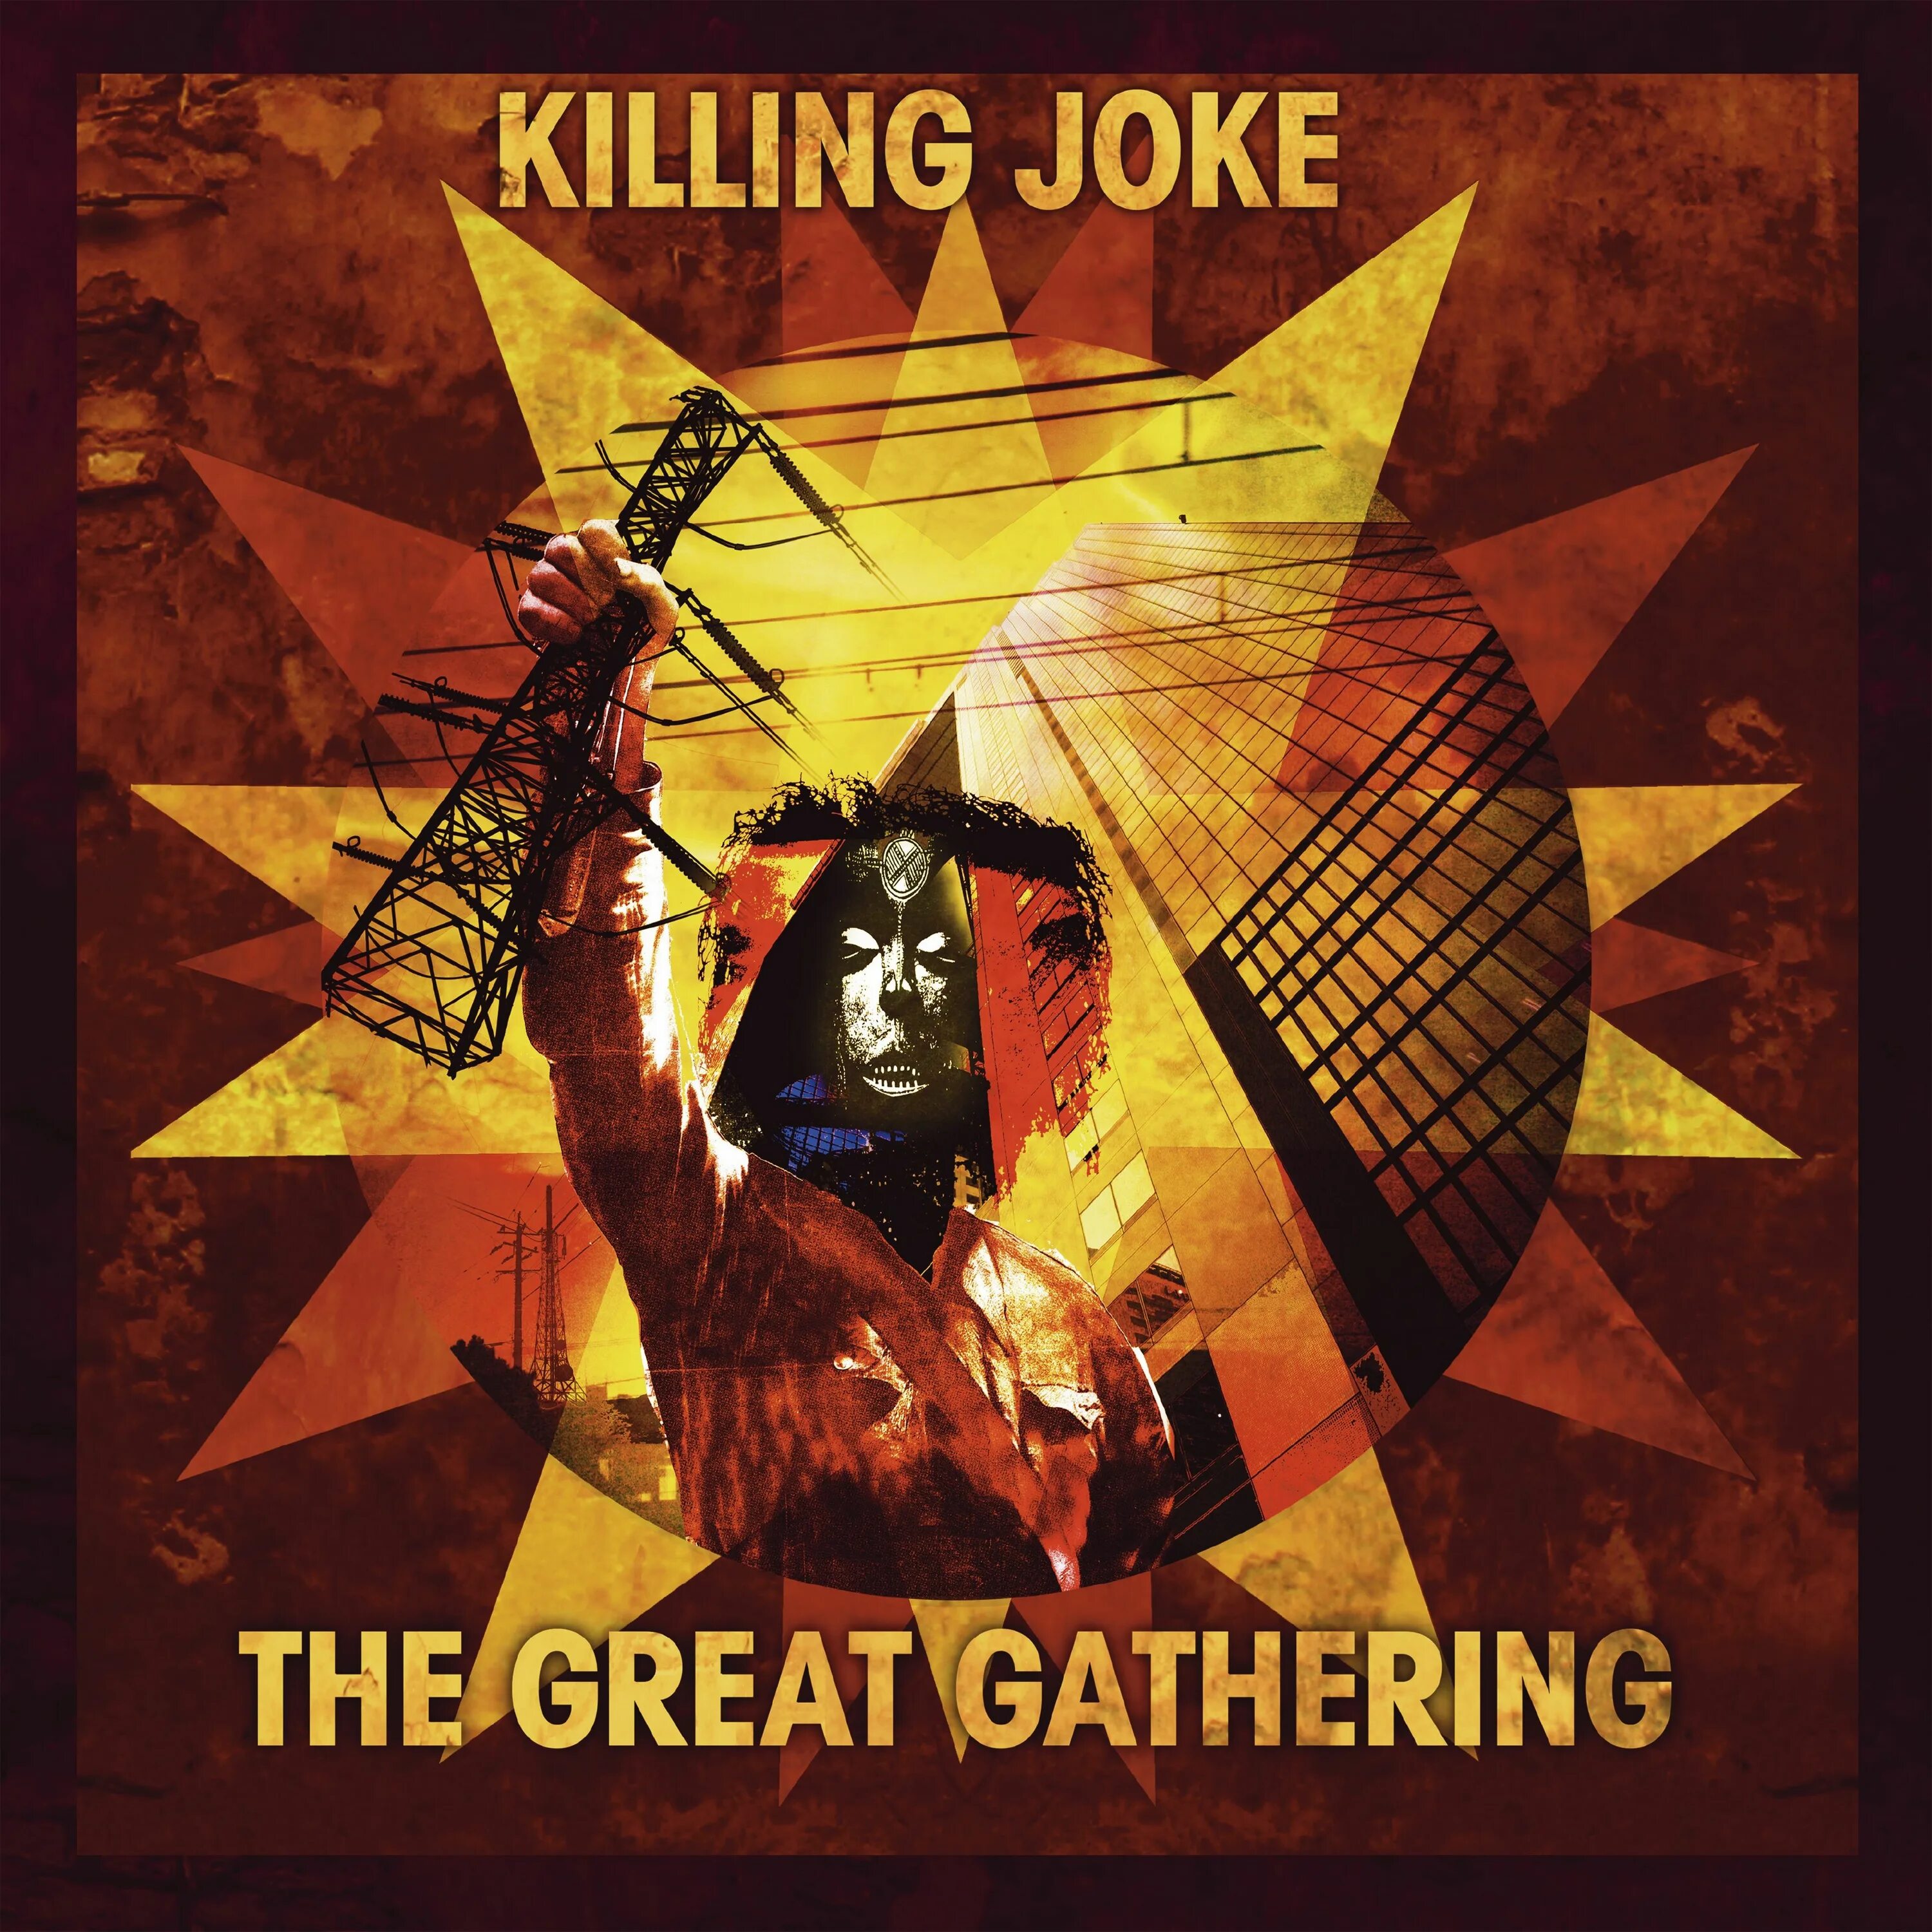 Killing joke. Killing joke album. Killing joke альбомы. CD Killing joke: Pylon. The great gathering